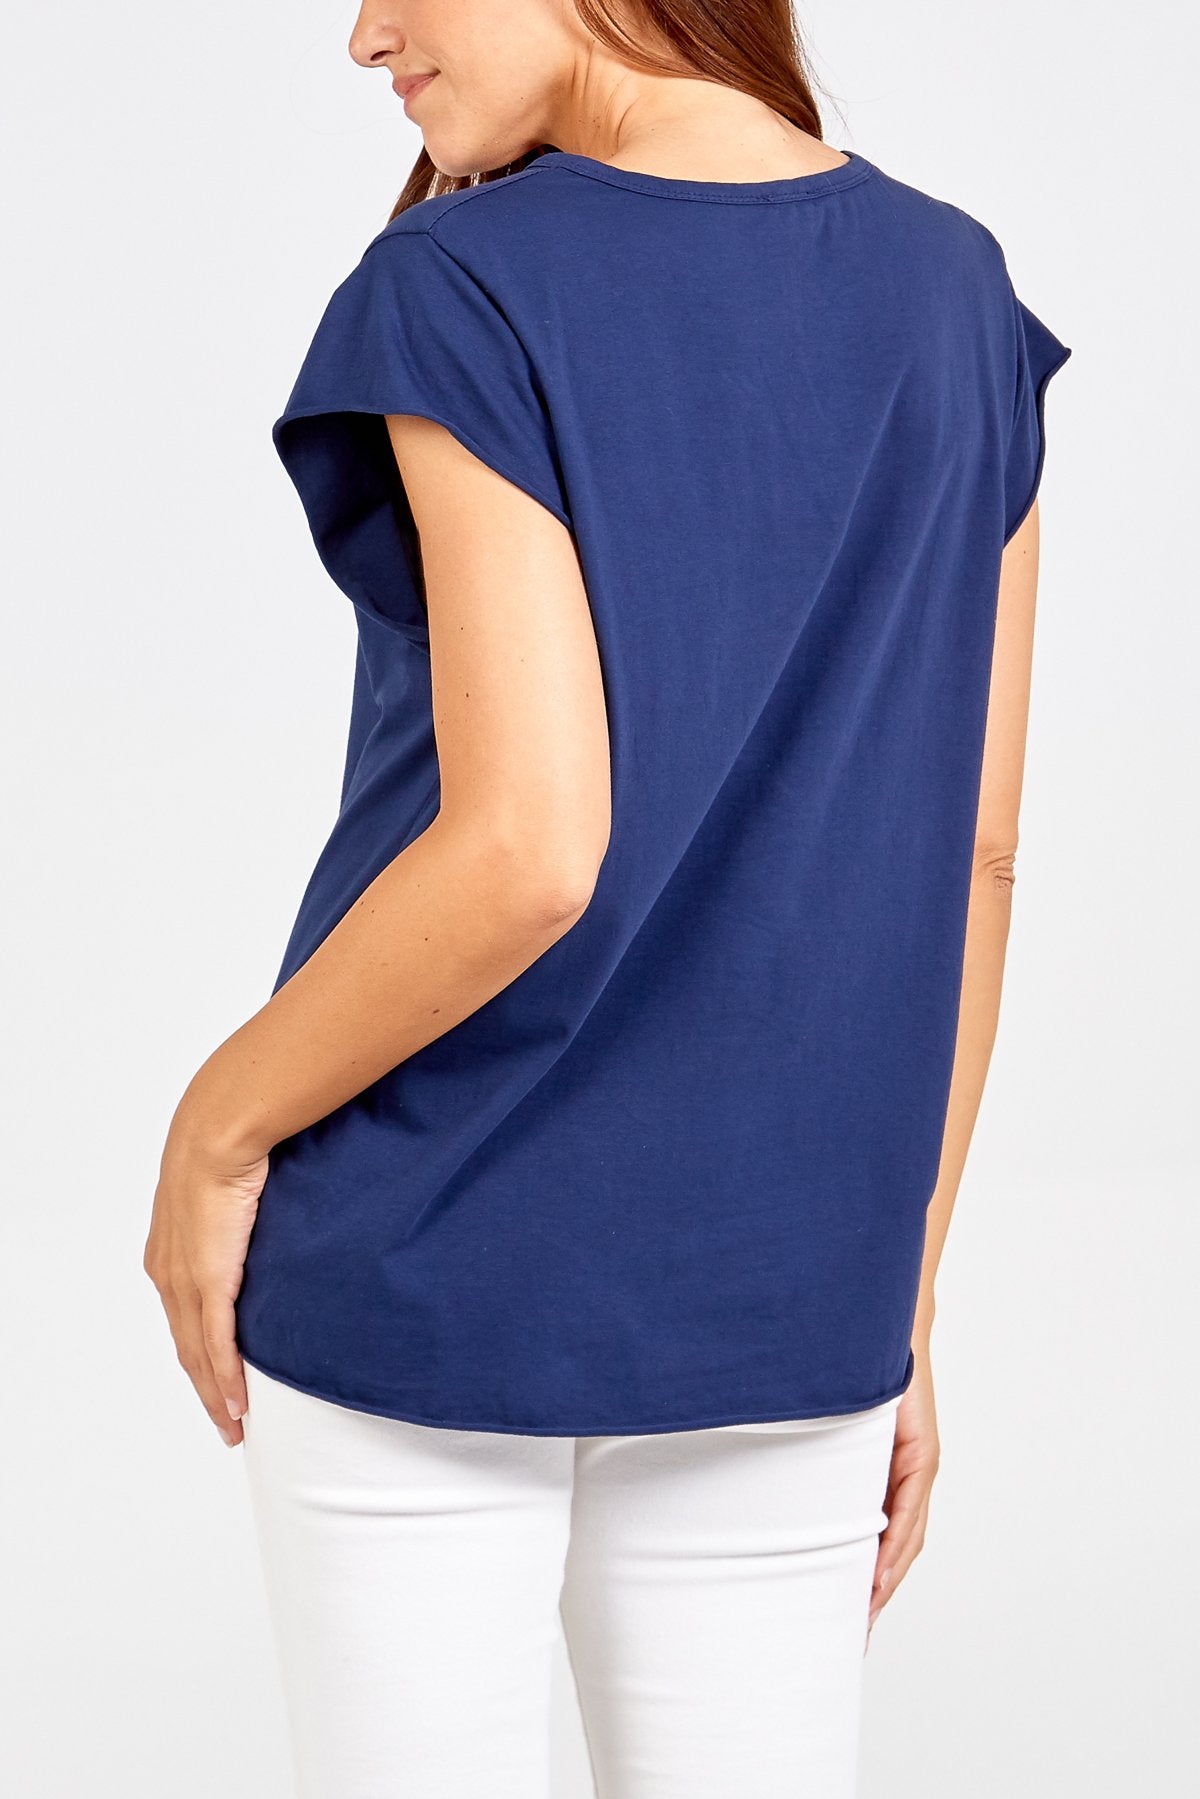 HiLo Cap Sleeve Tee Shirt - Navy - Liven Boutique